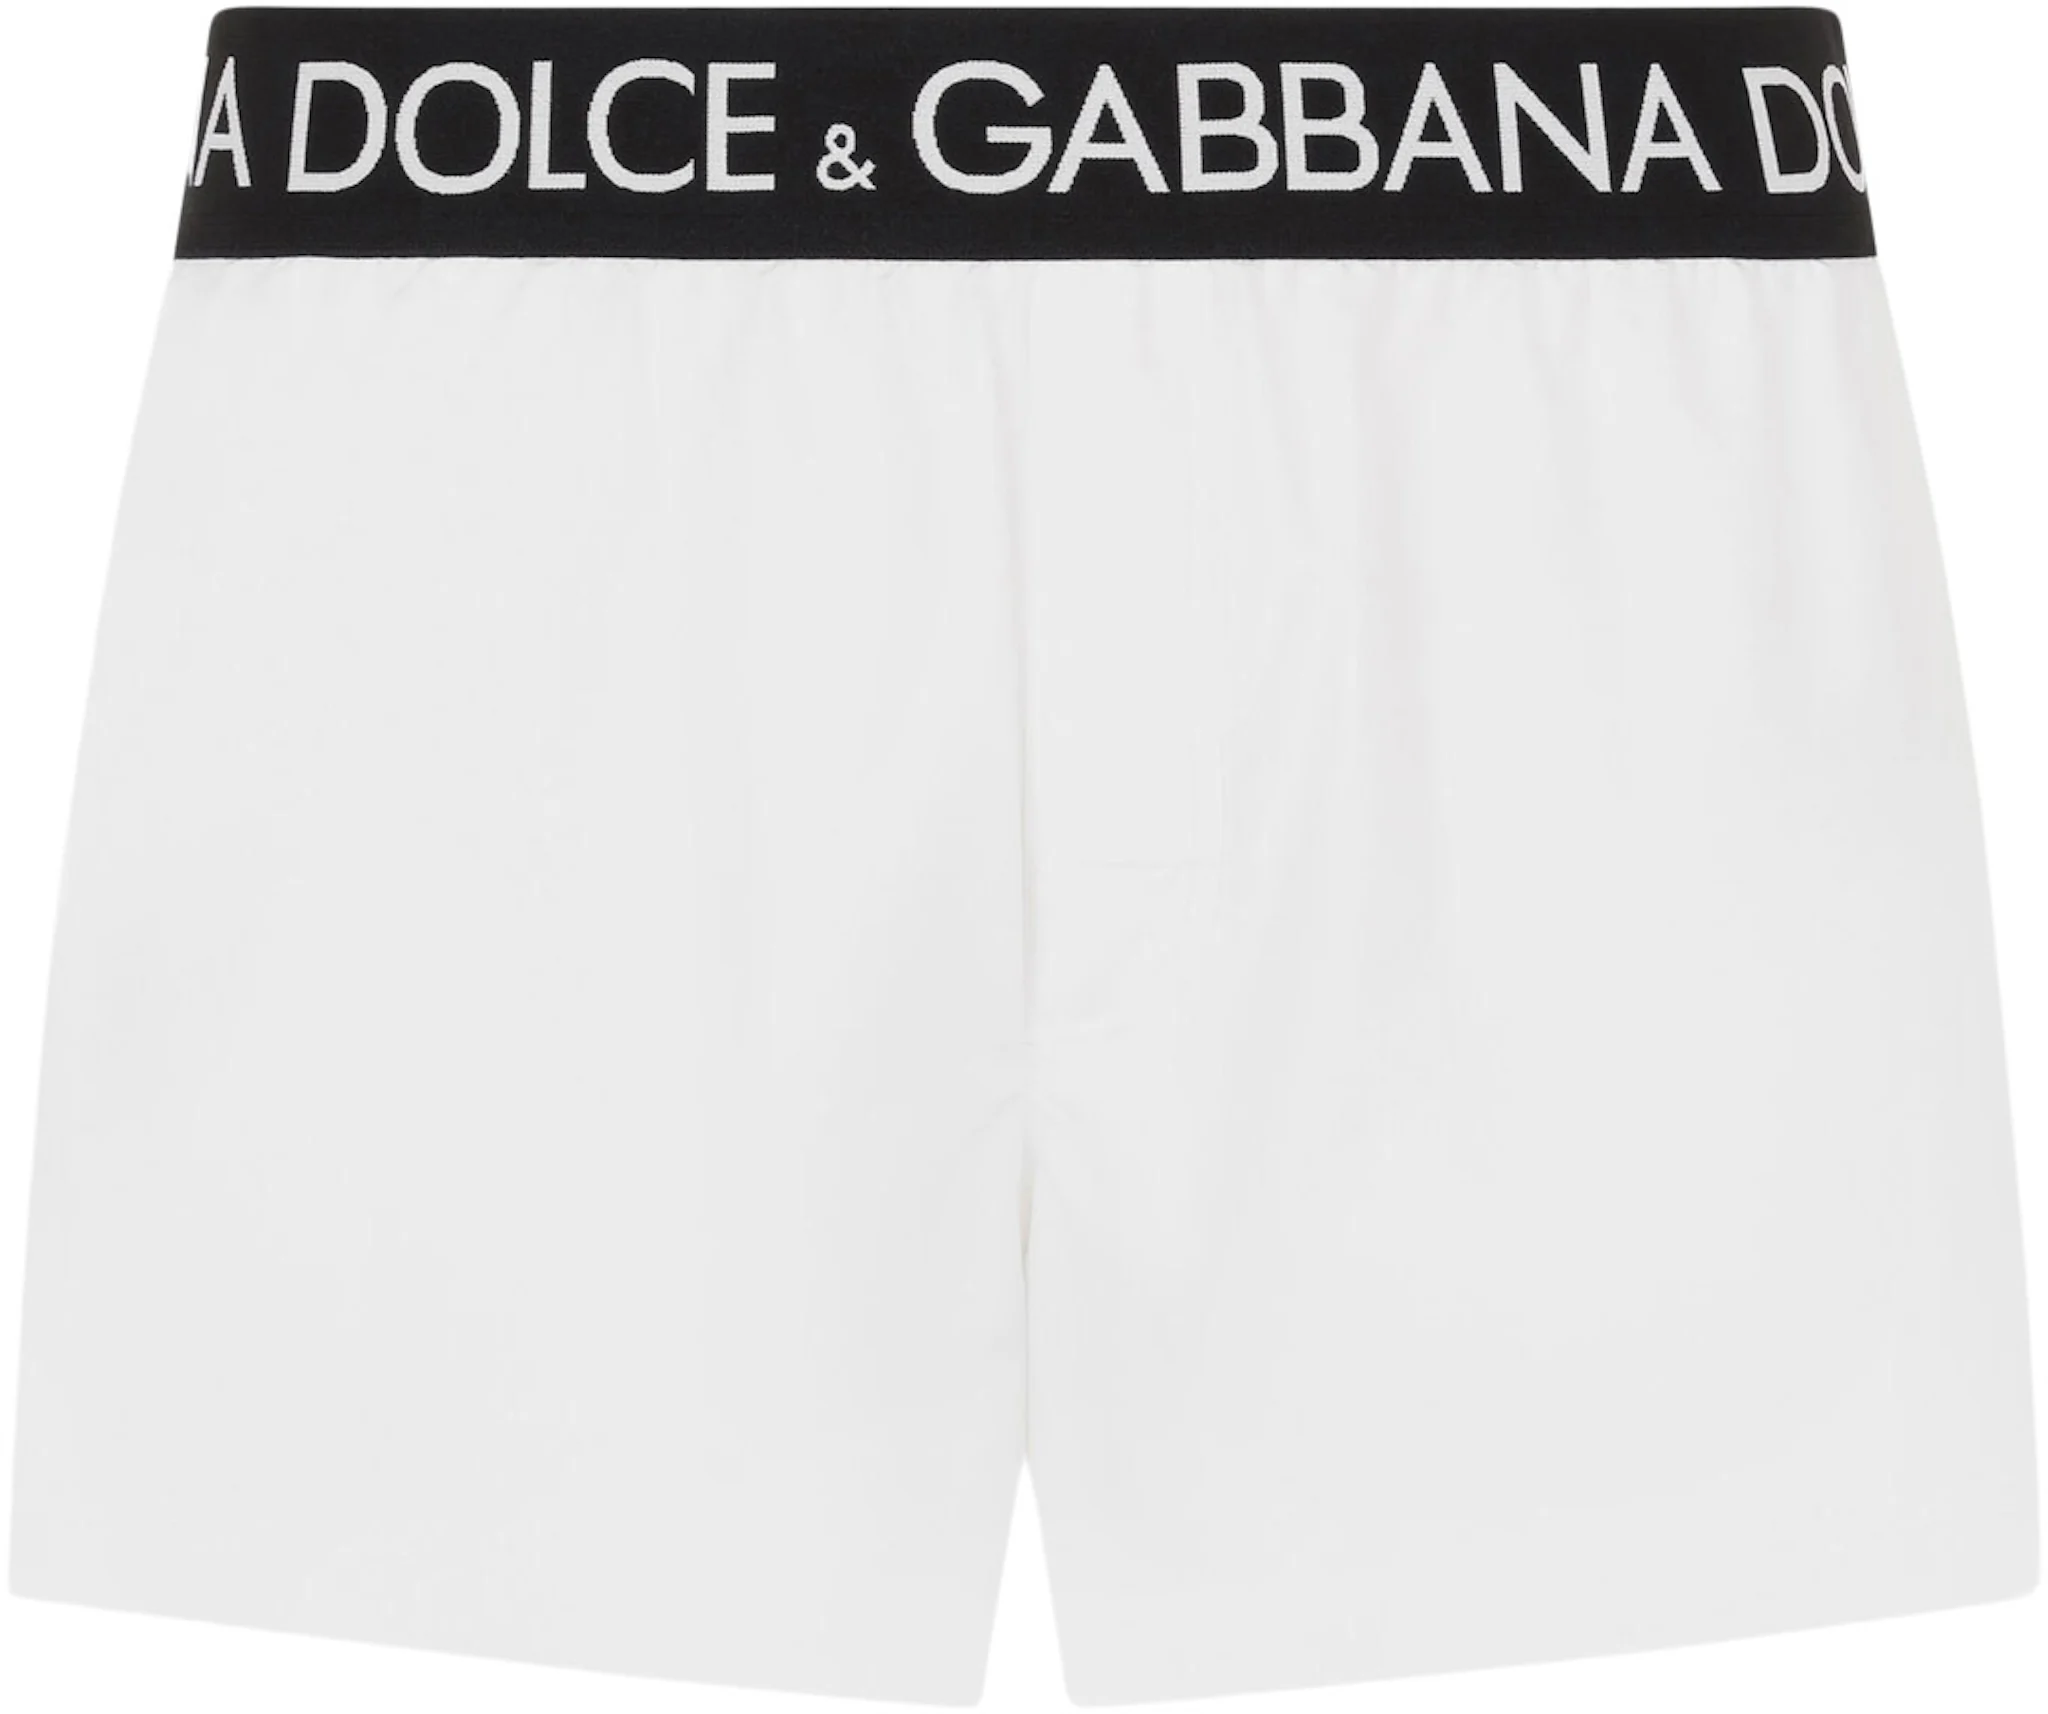 https://images.stockx.com/images/Dolce-Gabbana-Logo-Band-Swim-Shorts-White-Black-White.jpg?fit=fill&bg=FFFFFF&w=1200&h=857&fm=webp&auto=compress&dpr=2&trim=color&updated_at=1658404106&q=60